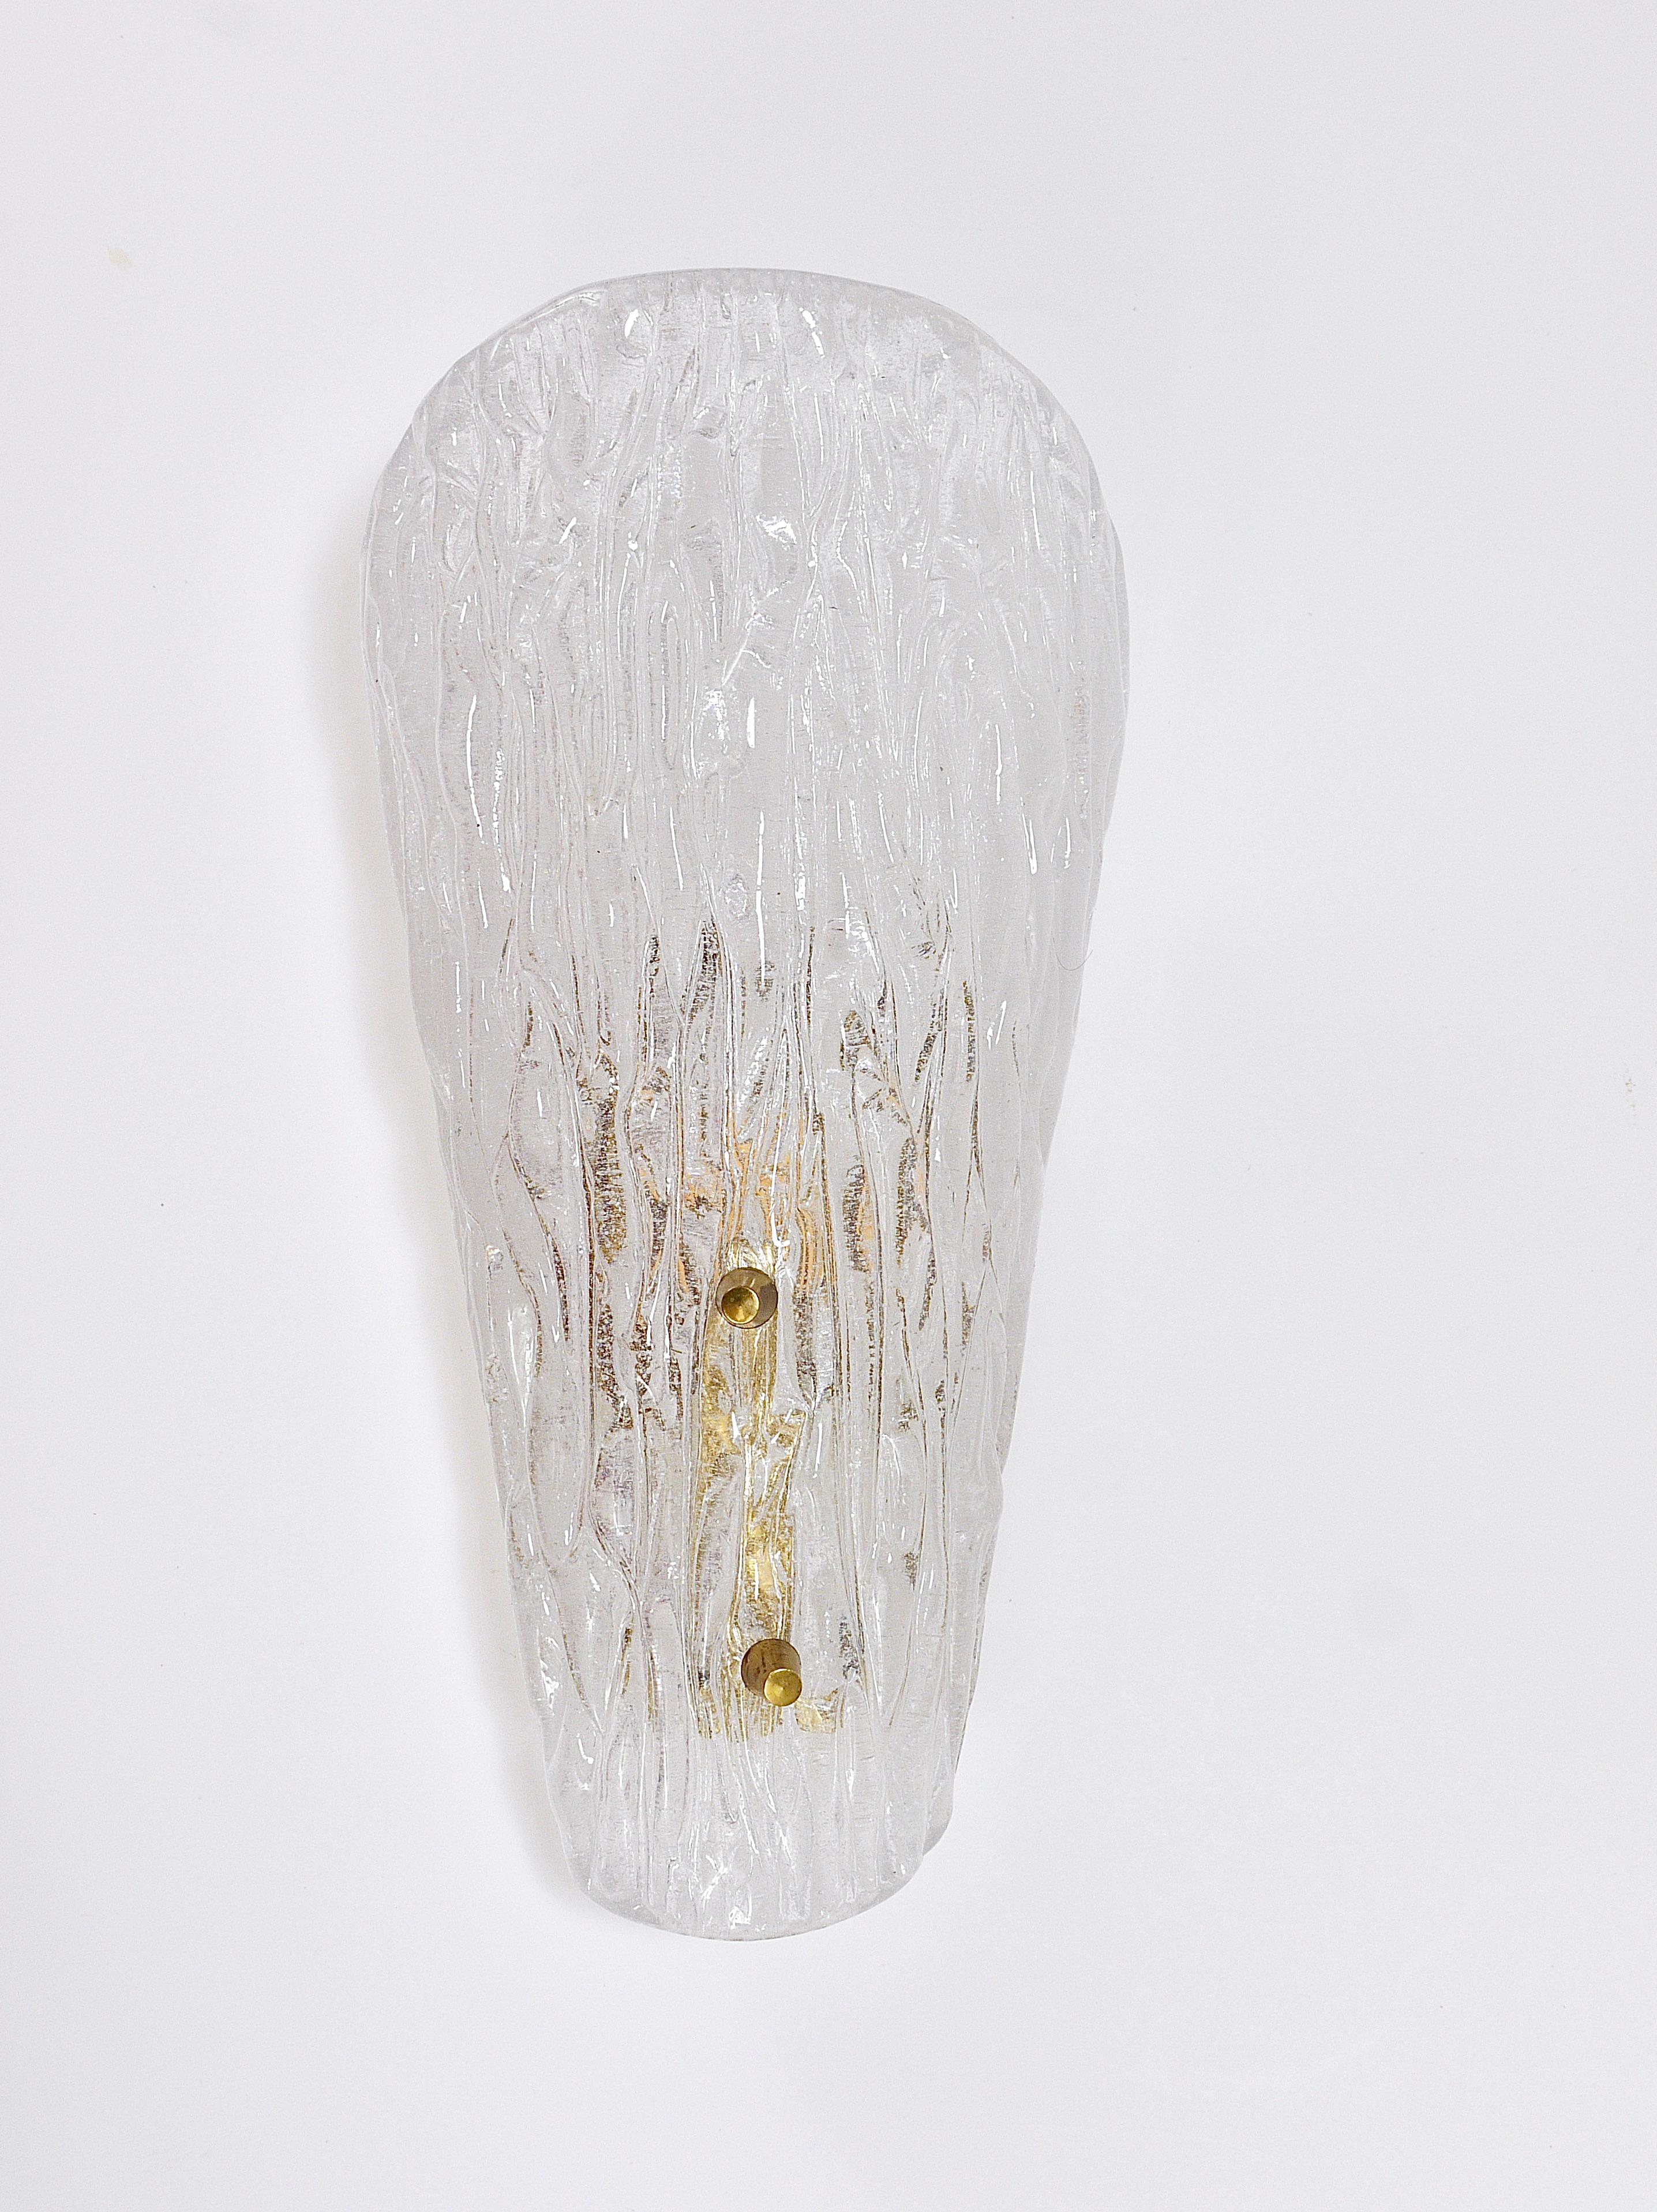 One Kalmar Midcentury Brass & Textured Glass Scone Wall Light, Austria, 1950s For Sale 3